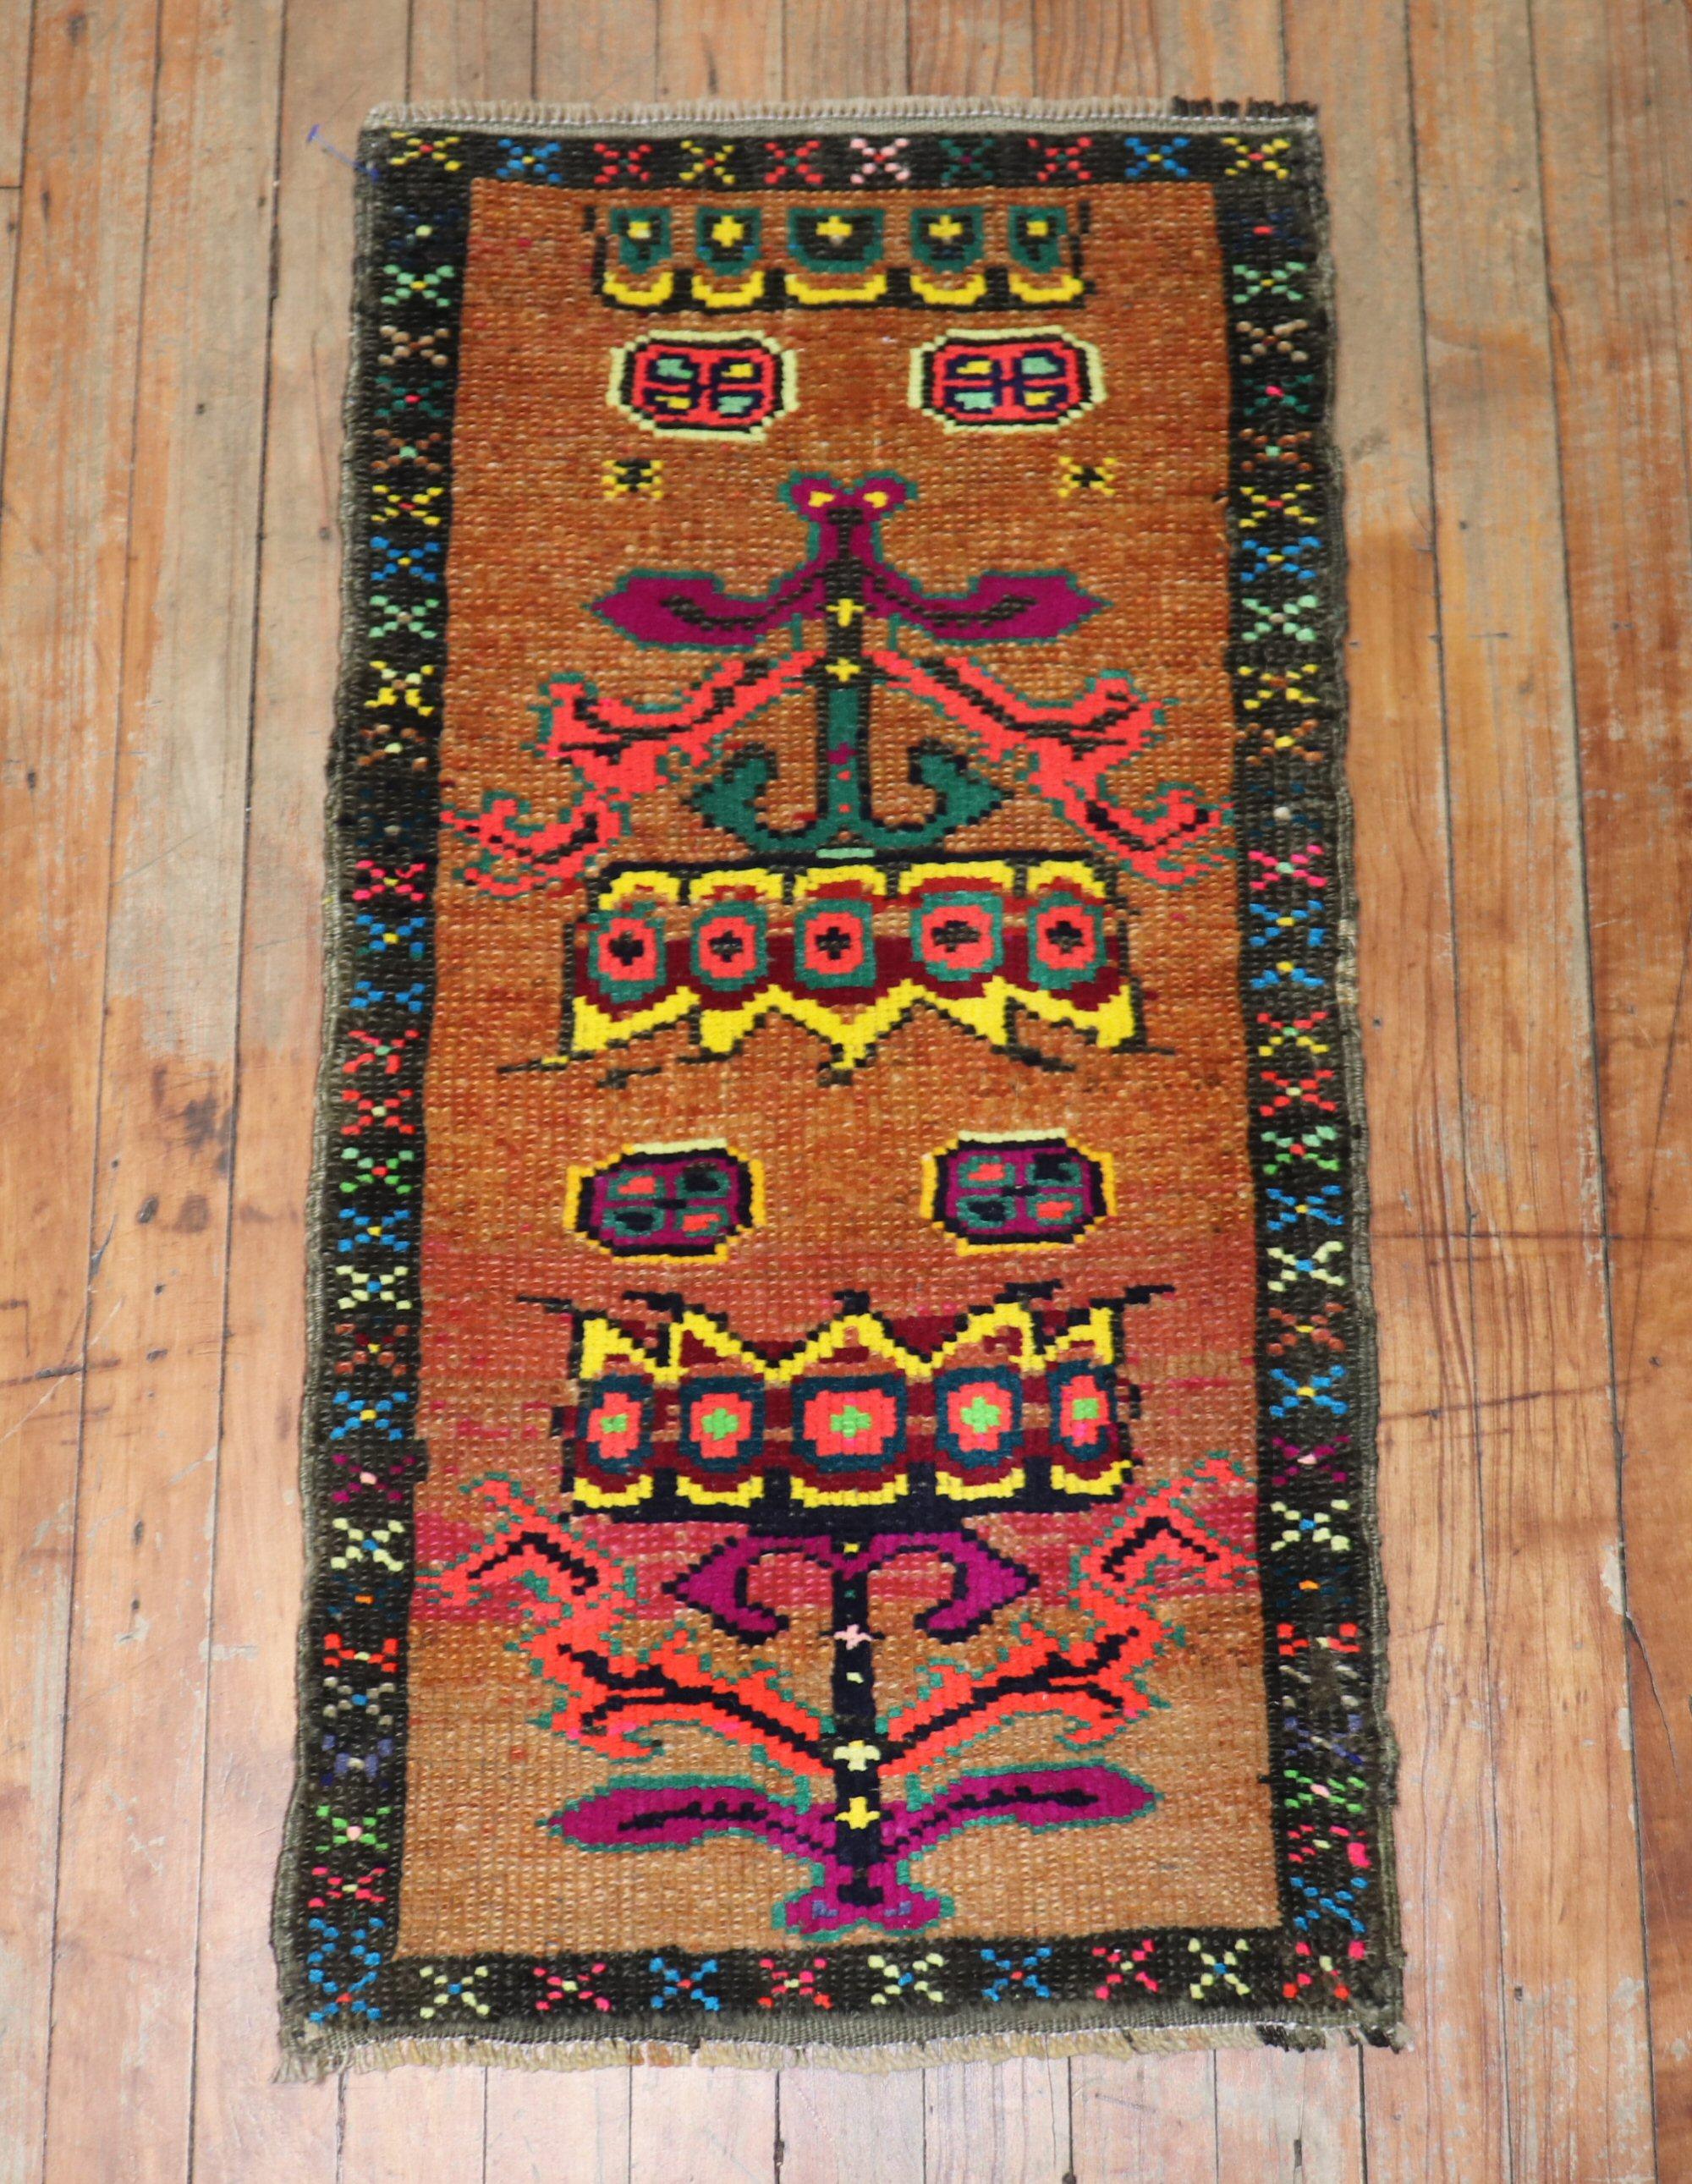 Mini size mid 20th century Turkish Anatolian rug

Measures: 1'6'' x 2'10''